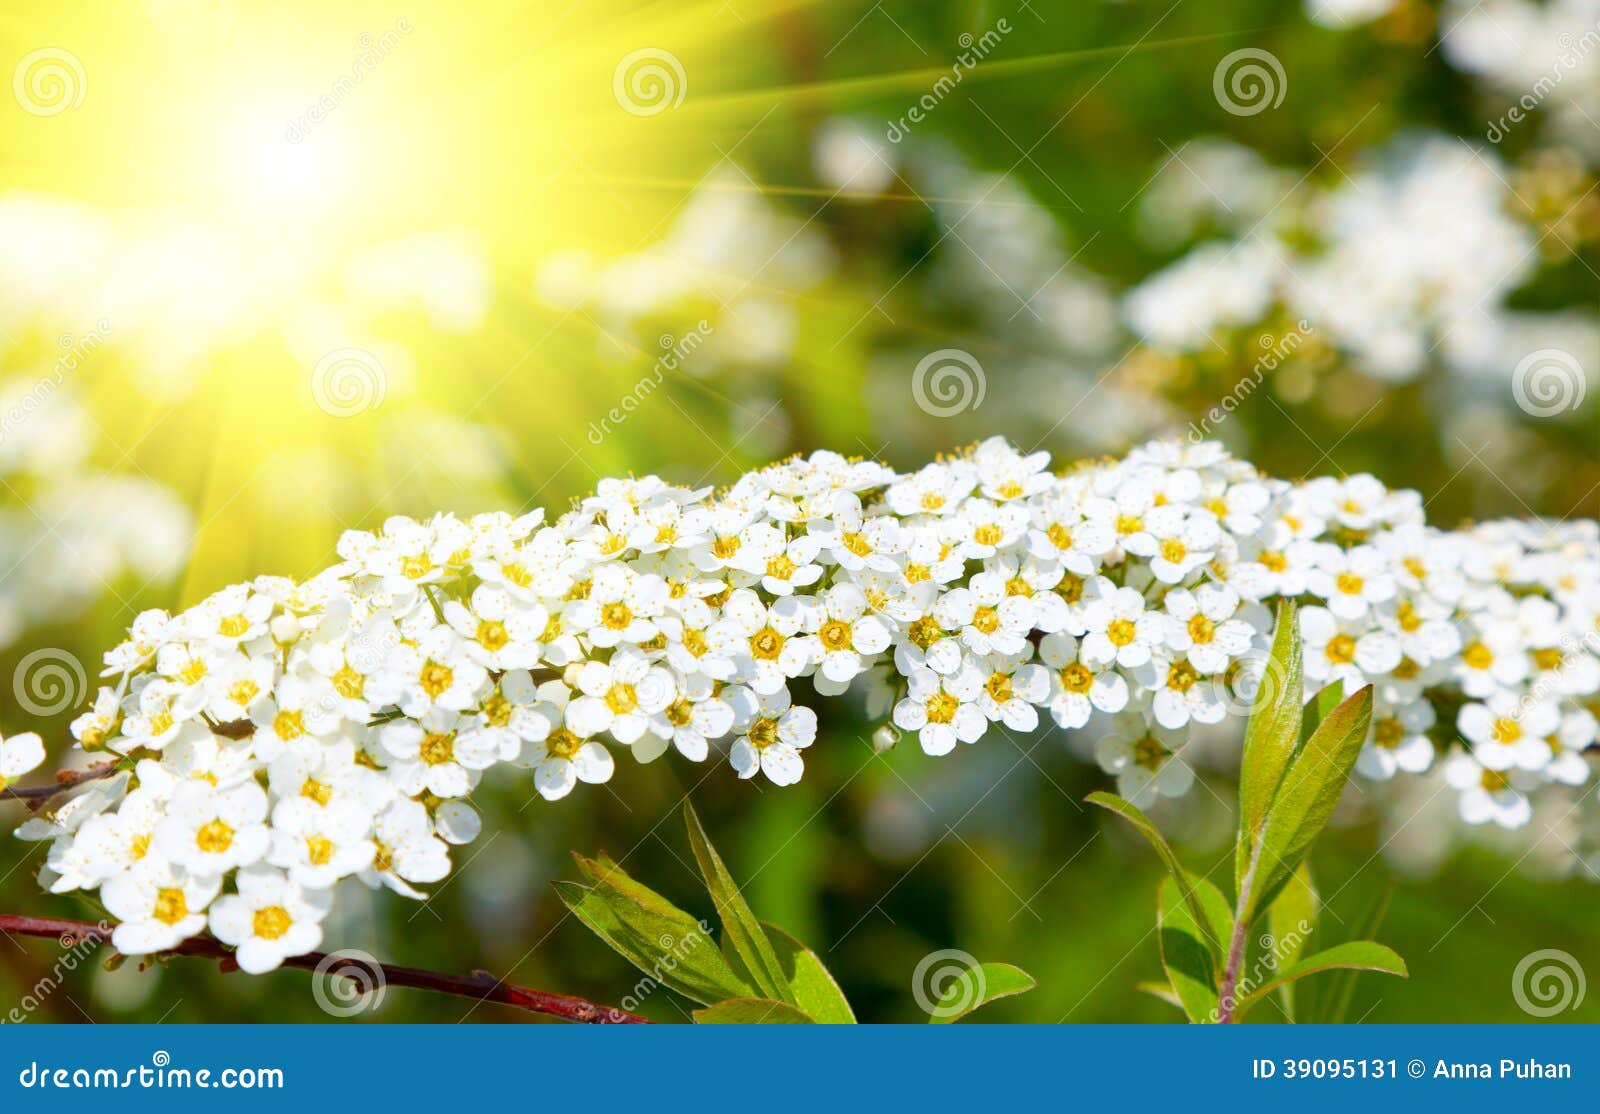 white spiraea (meadowsweet) flowers early spring